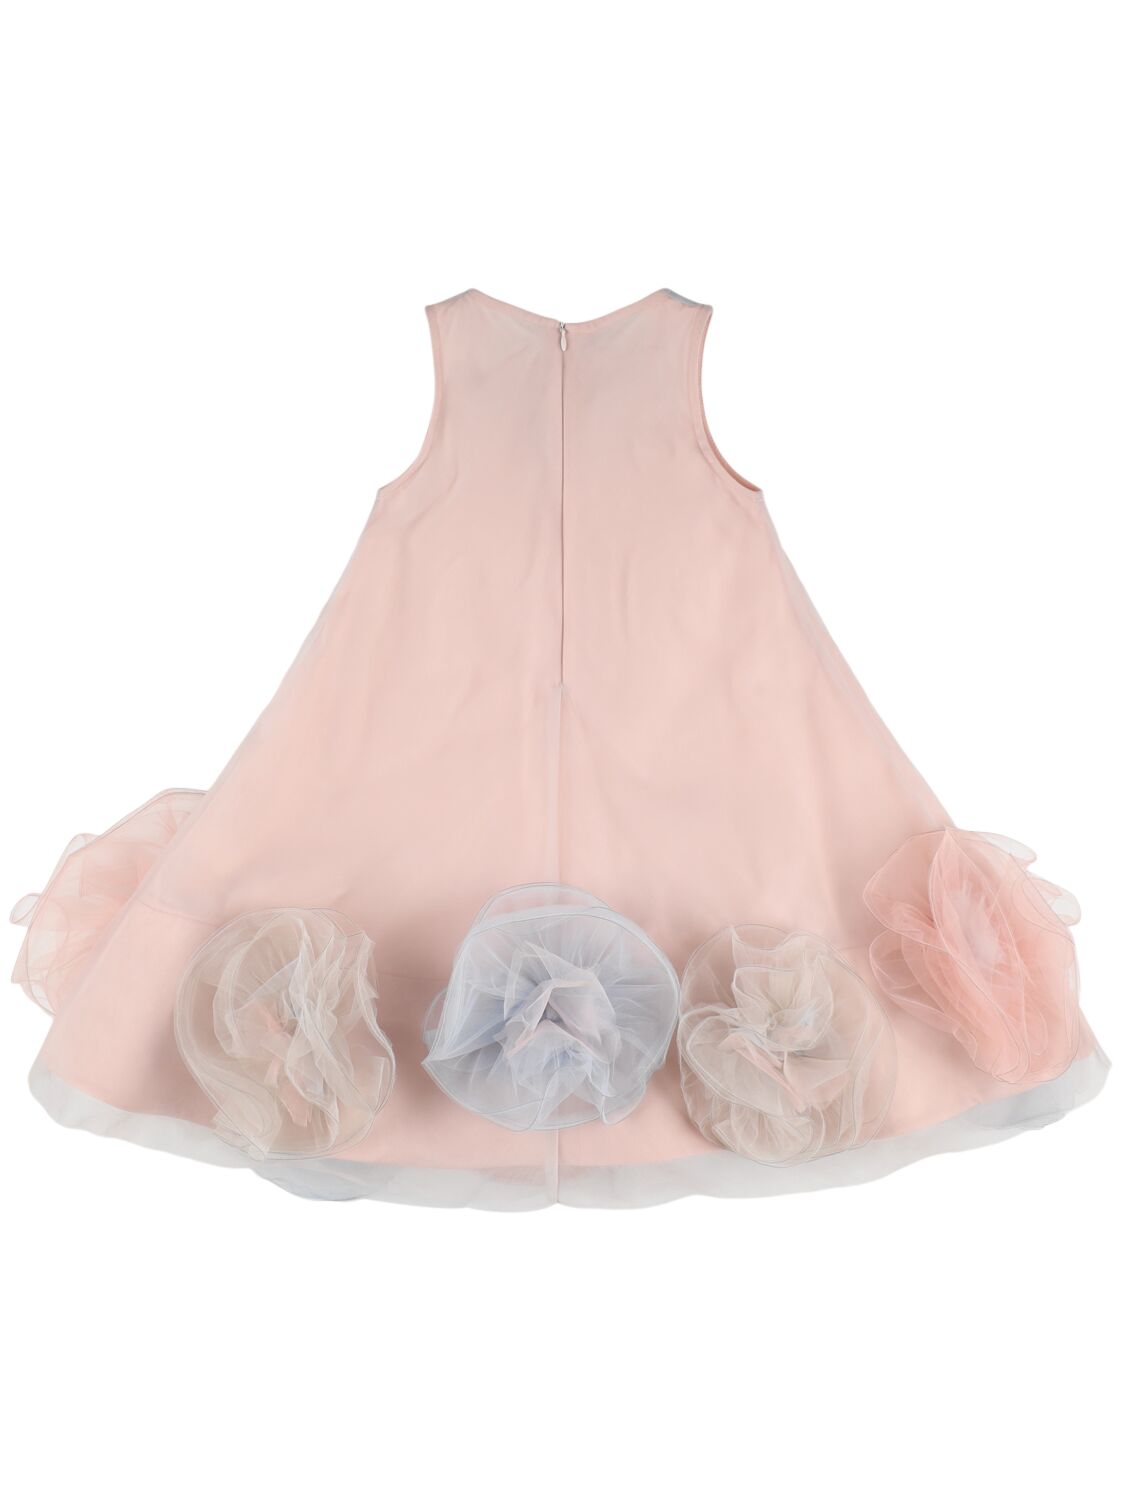 Shop Nikolia Embellished Tulle Dress W/ Appliqués In Pink,multi